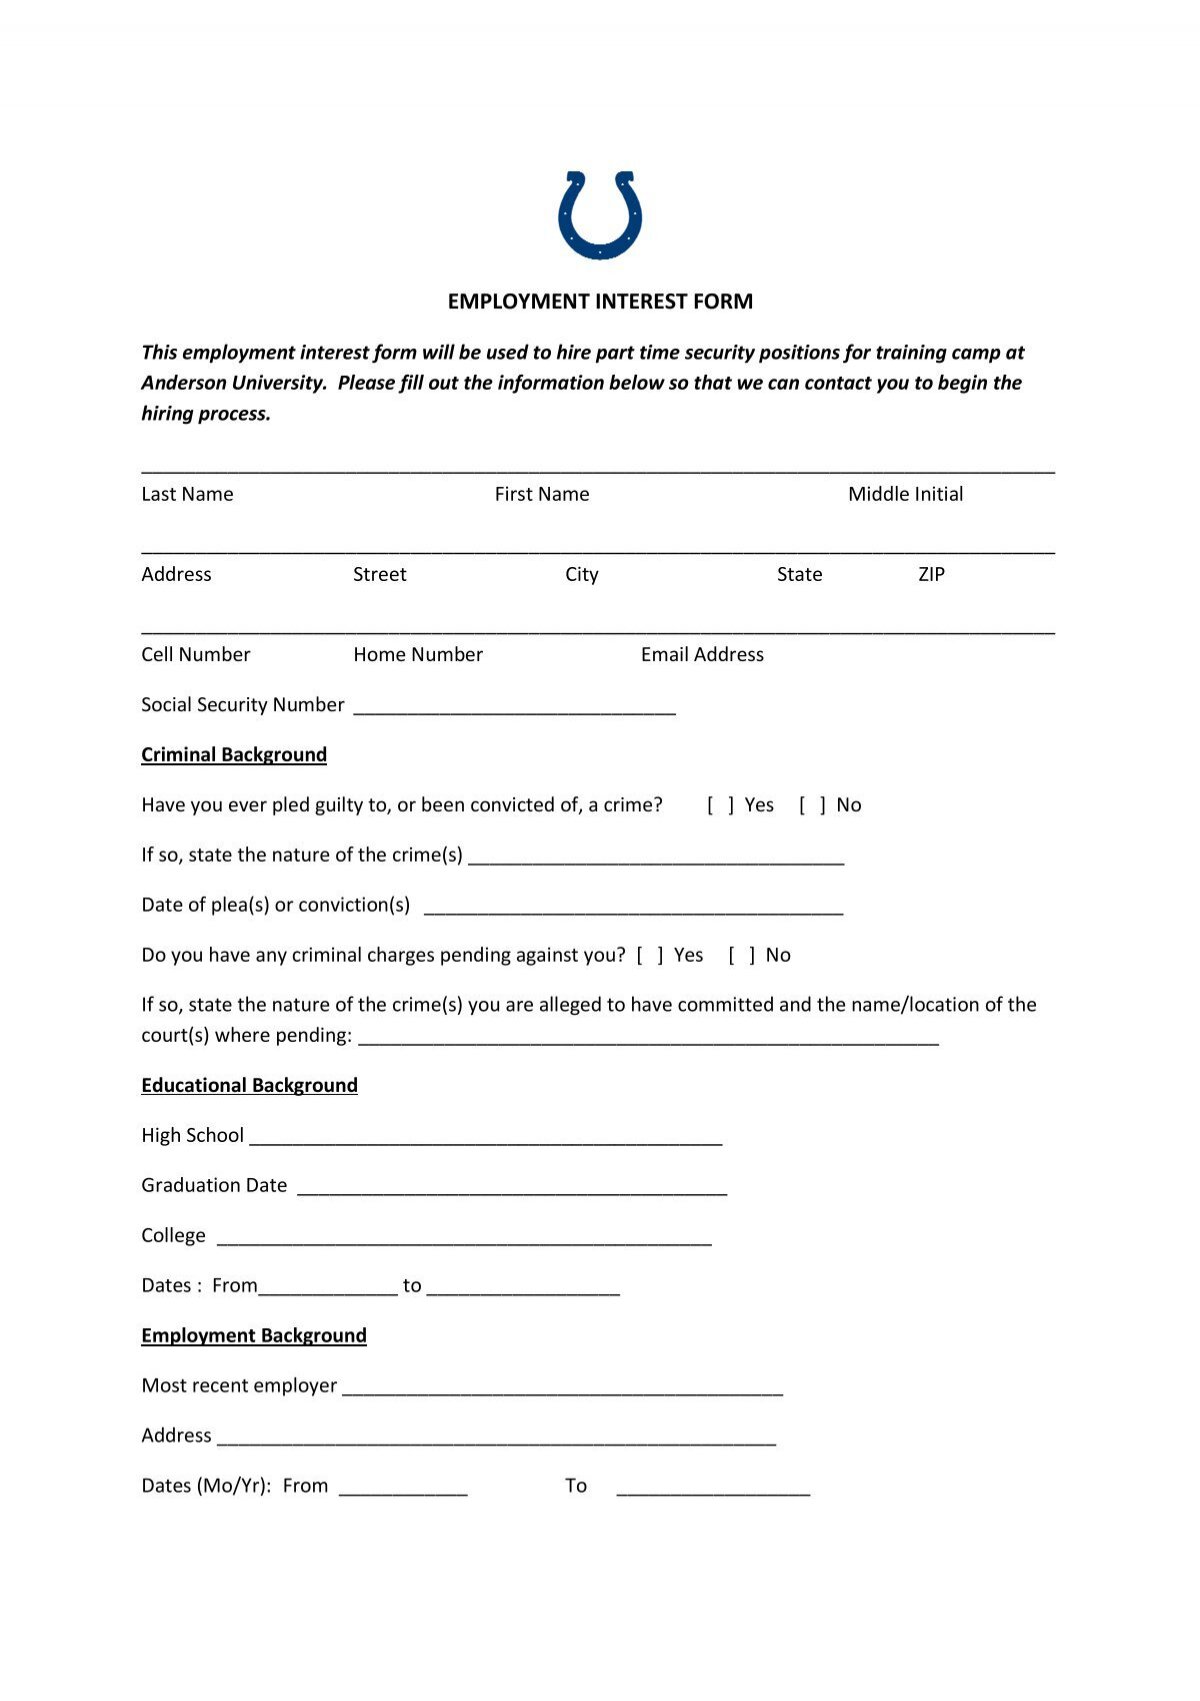 employment-interest-form-pdf-anderson-university